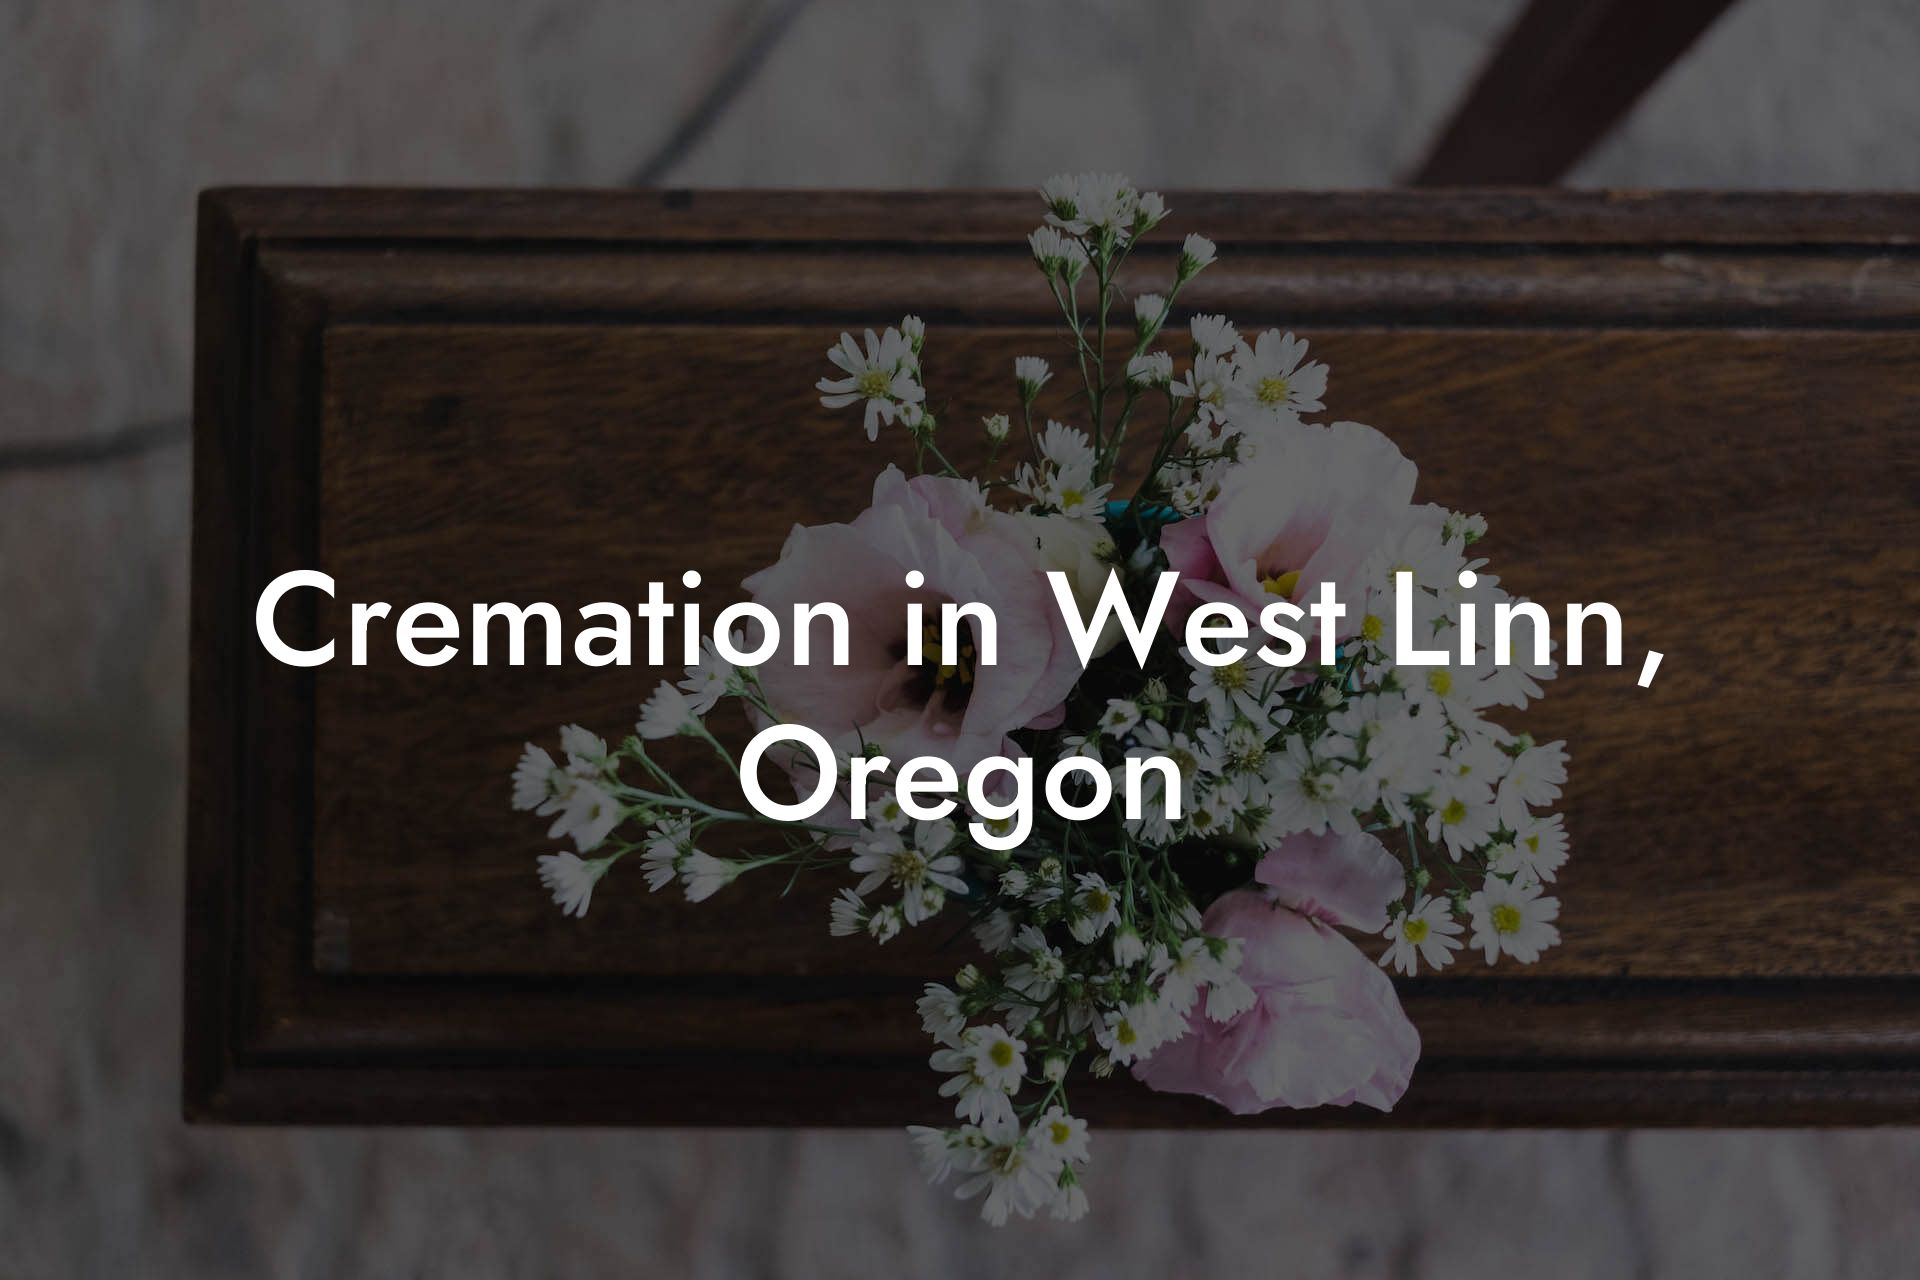 Cremation in West Linn, Oregon